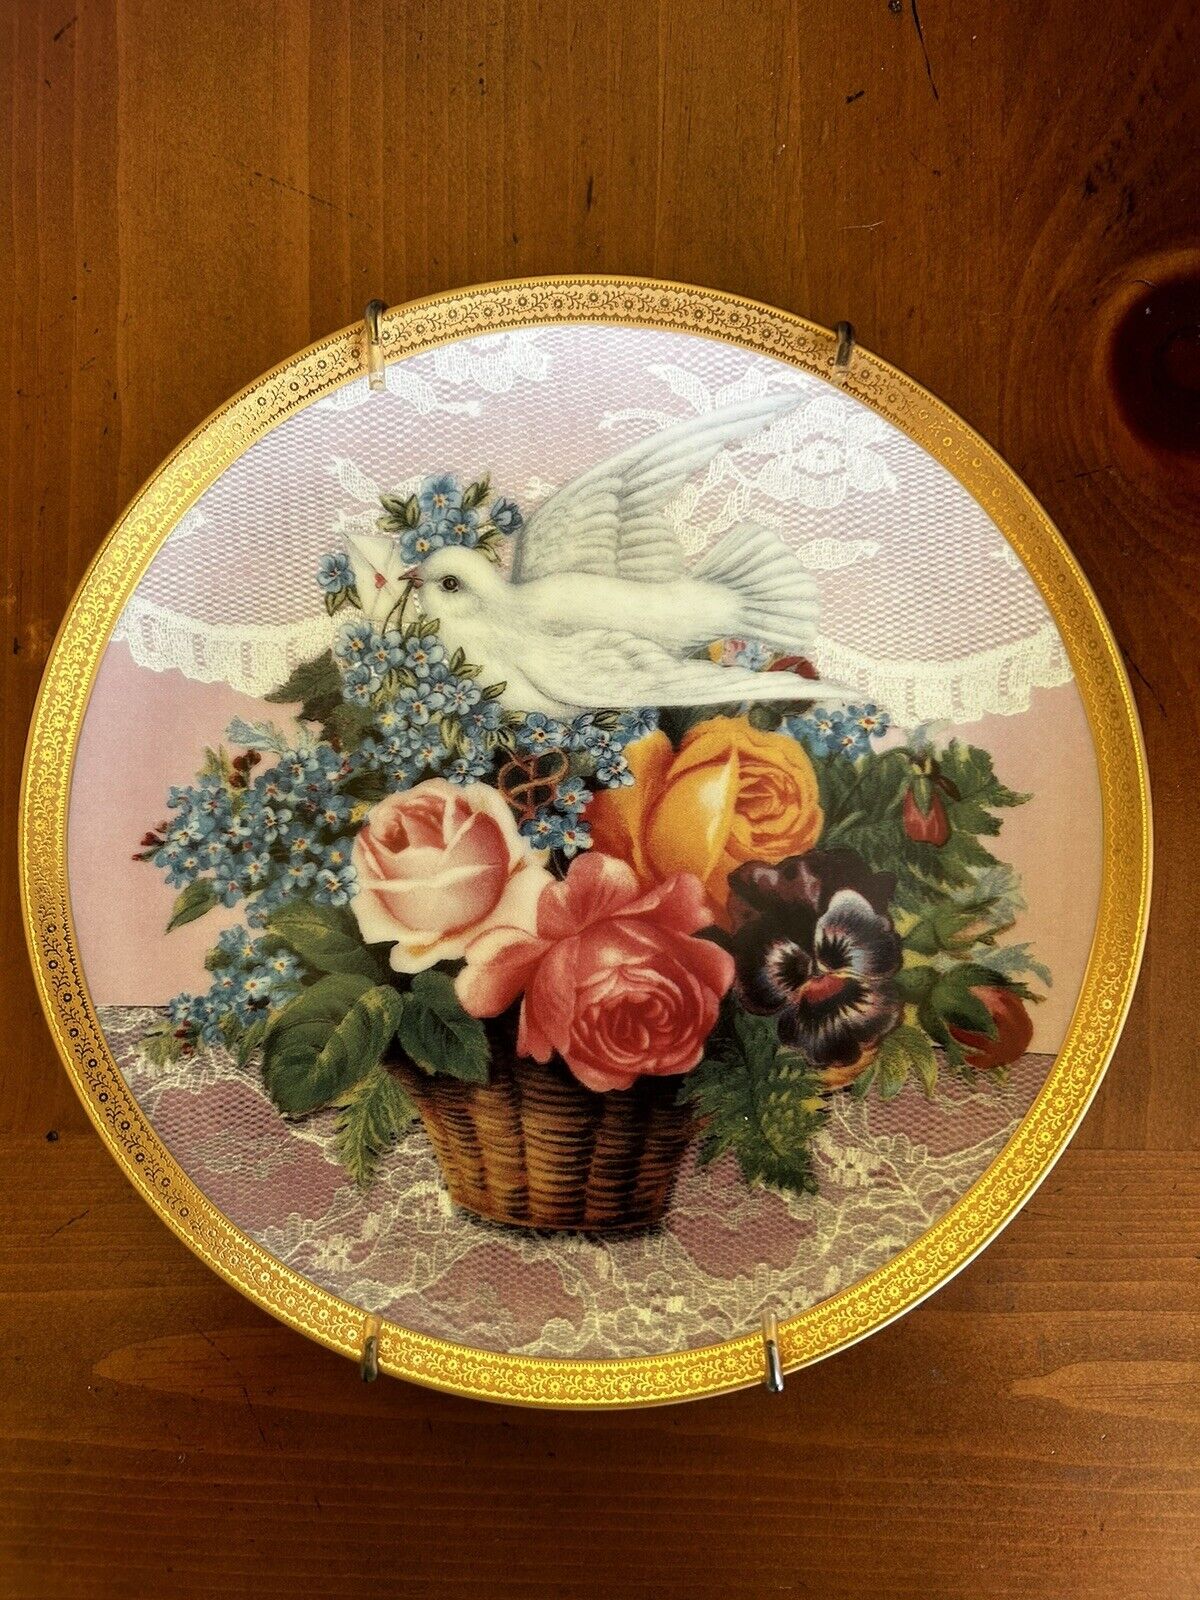 Gloria Vanderbilt Heirloom Collection Limited Edition Plate - Courtship in Bloom